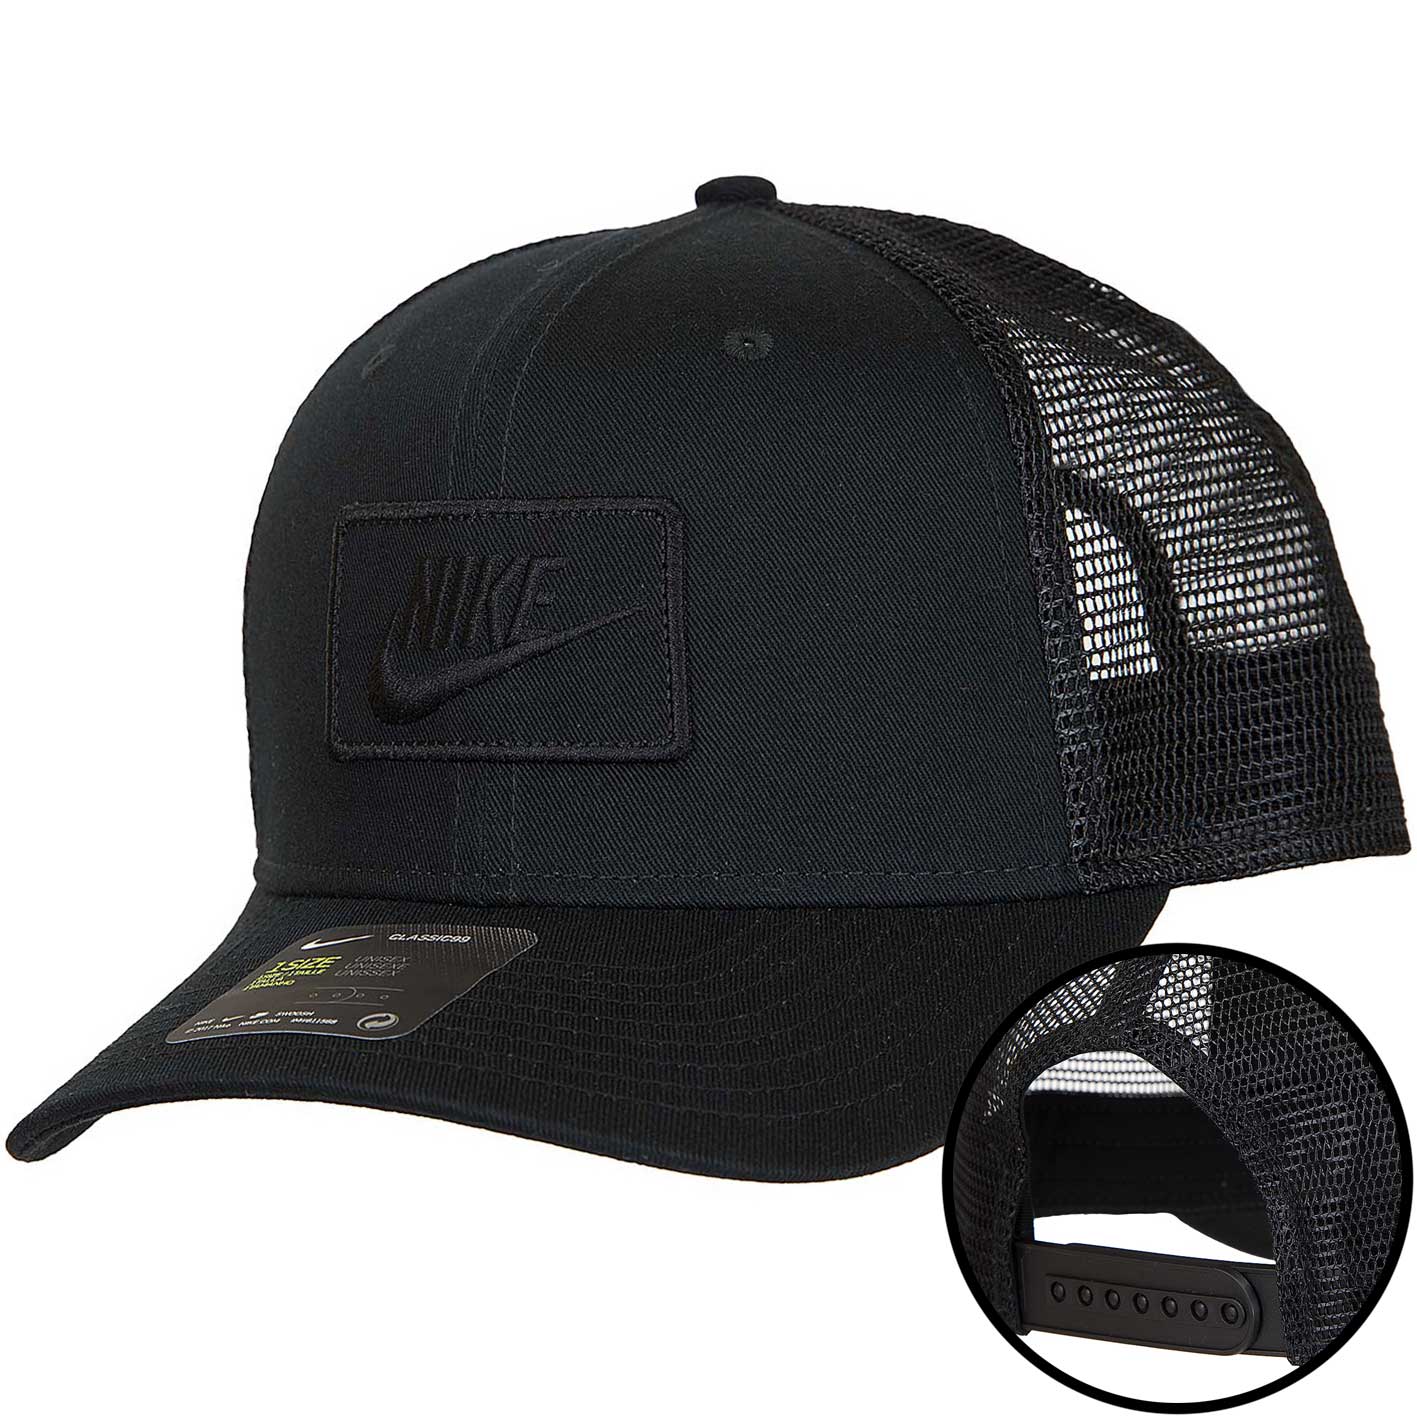 ☆ Nike Trucker Cap Classic99 schwarz - hier bestellen!